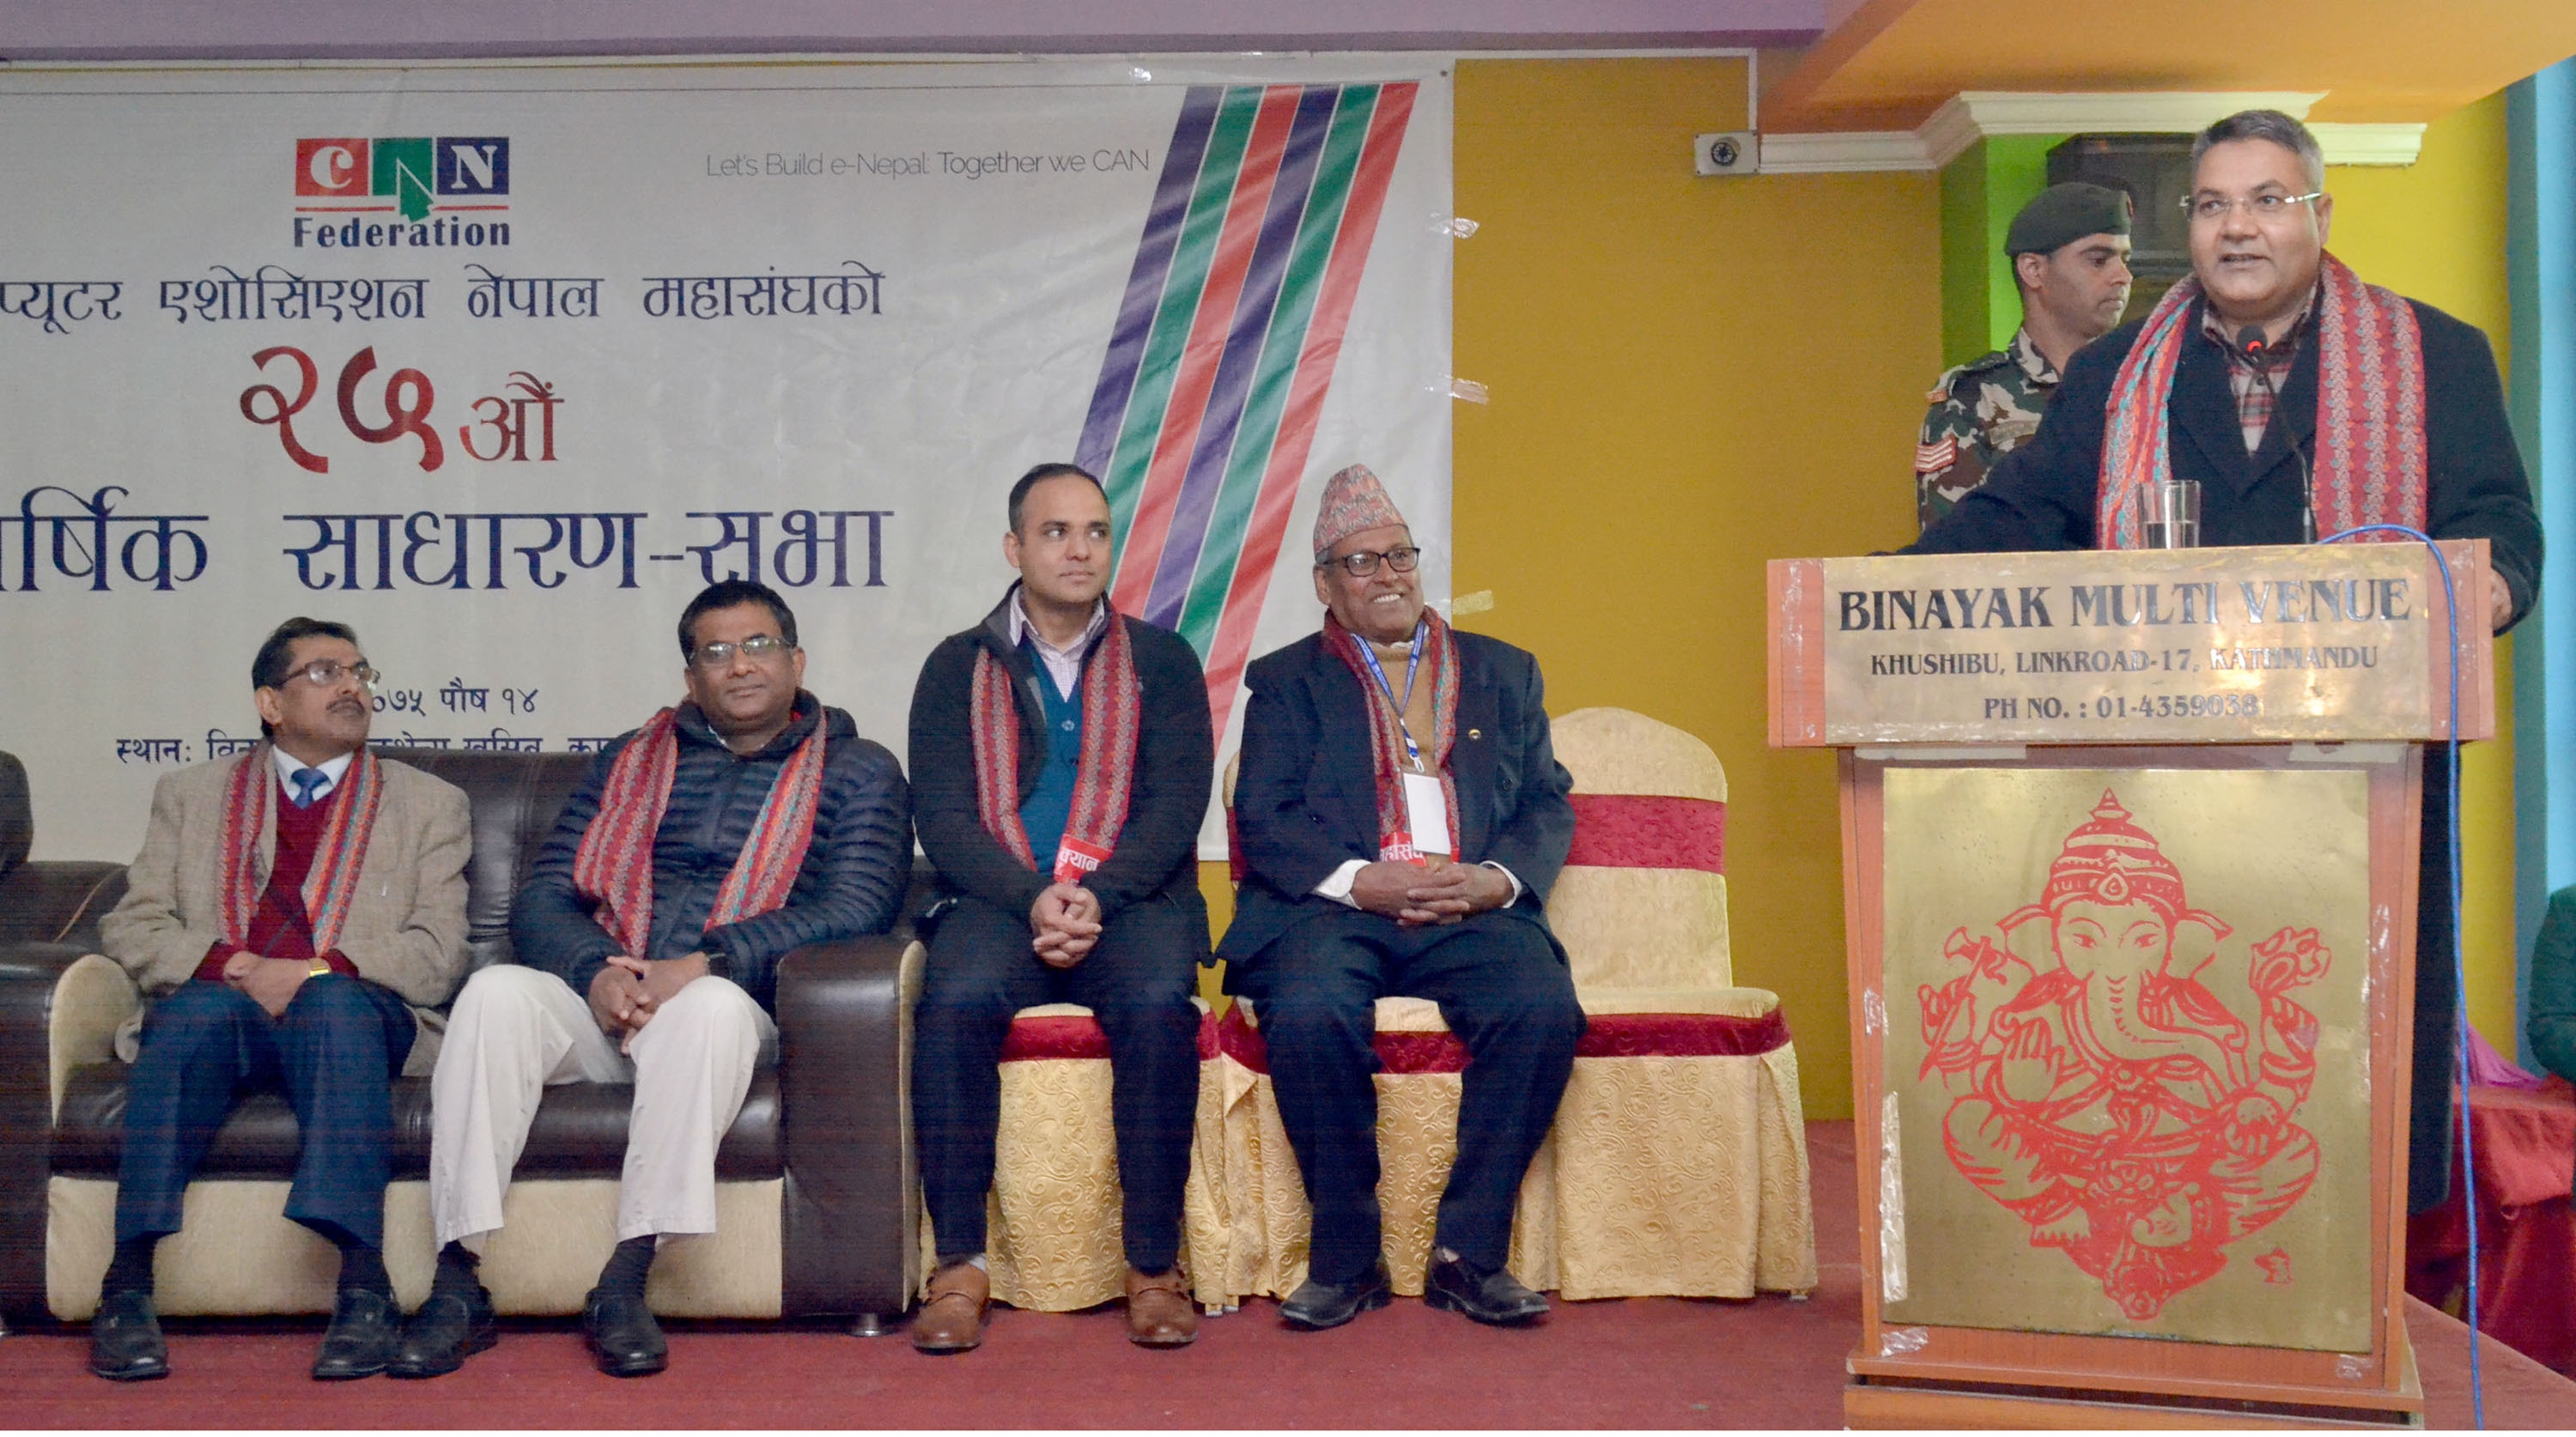 Govt will bring framework of digital Nepal within a month: Minister Banskota